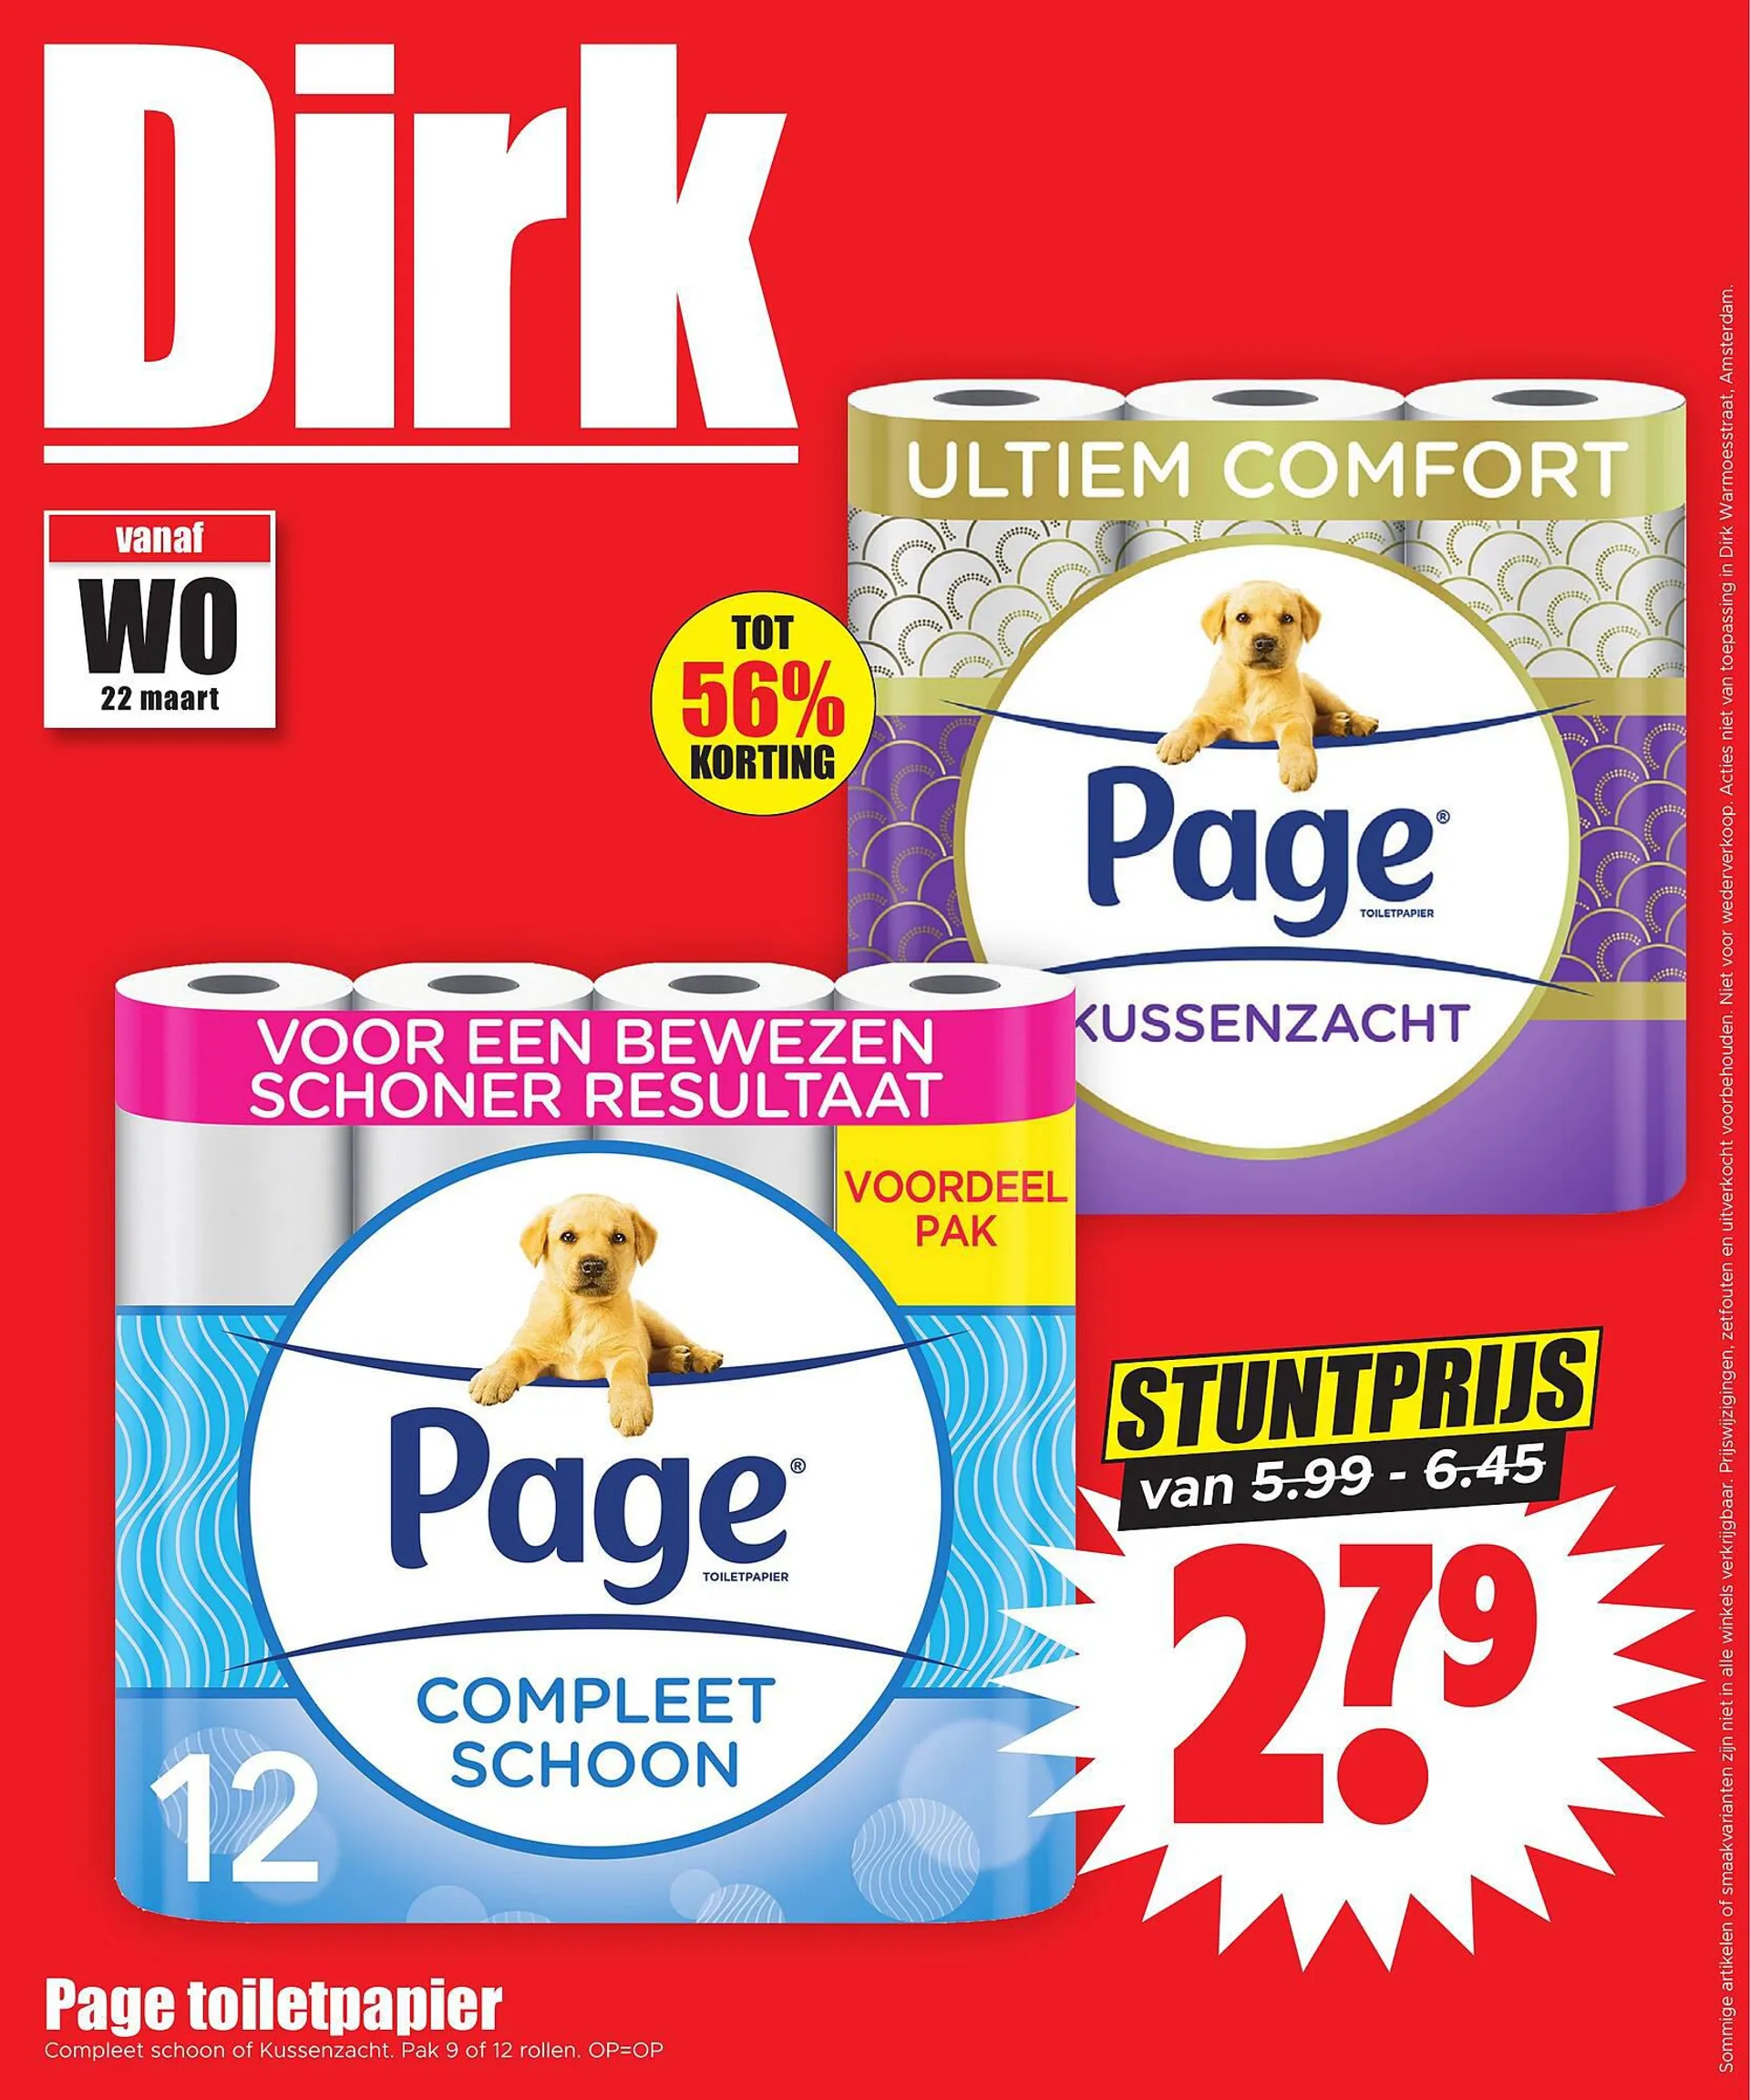 Dirk weekend folder - 32